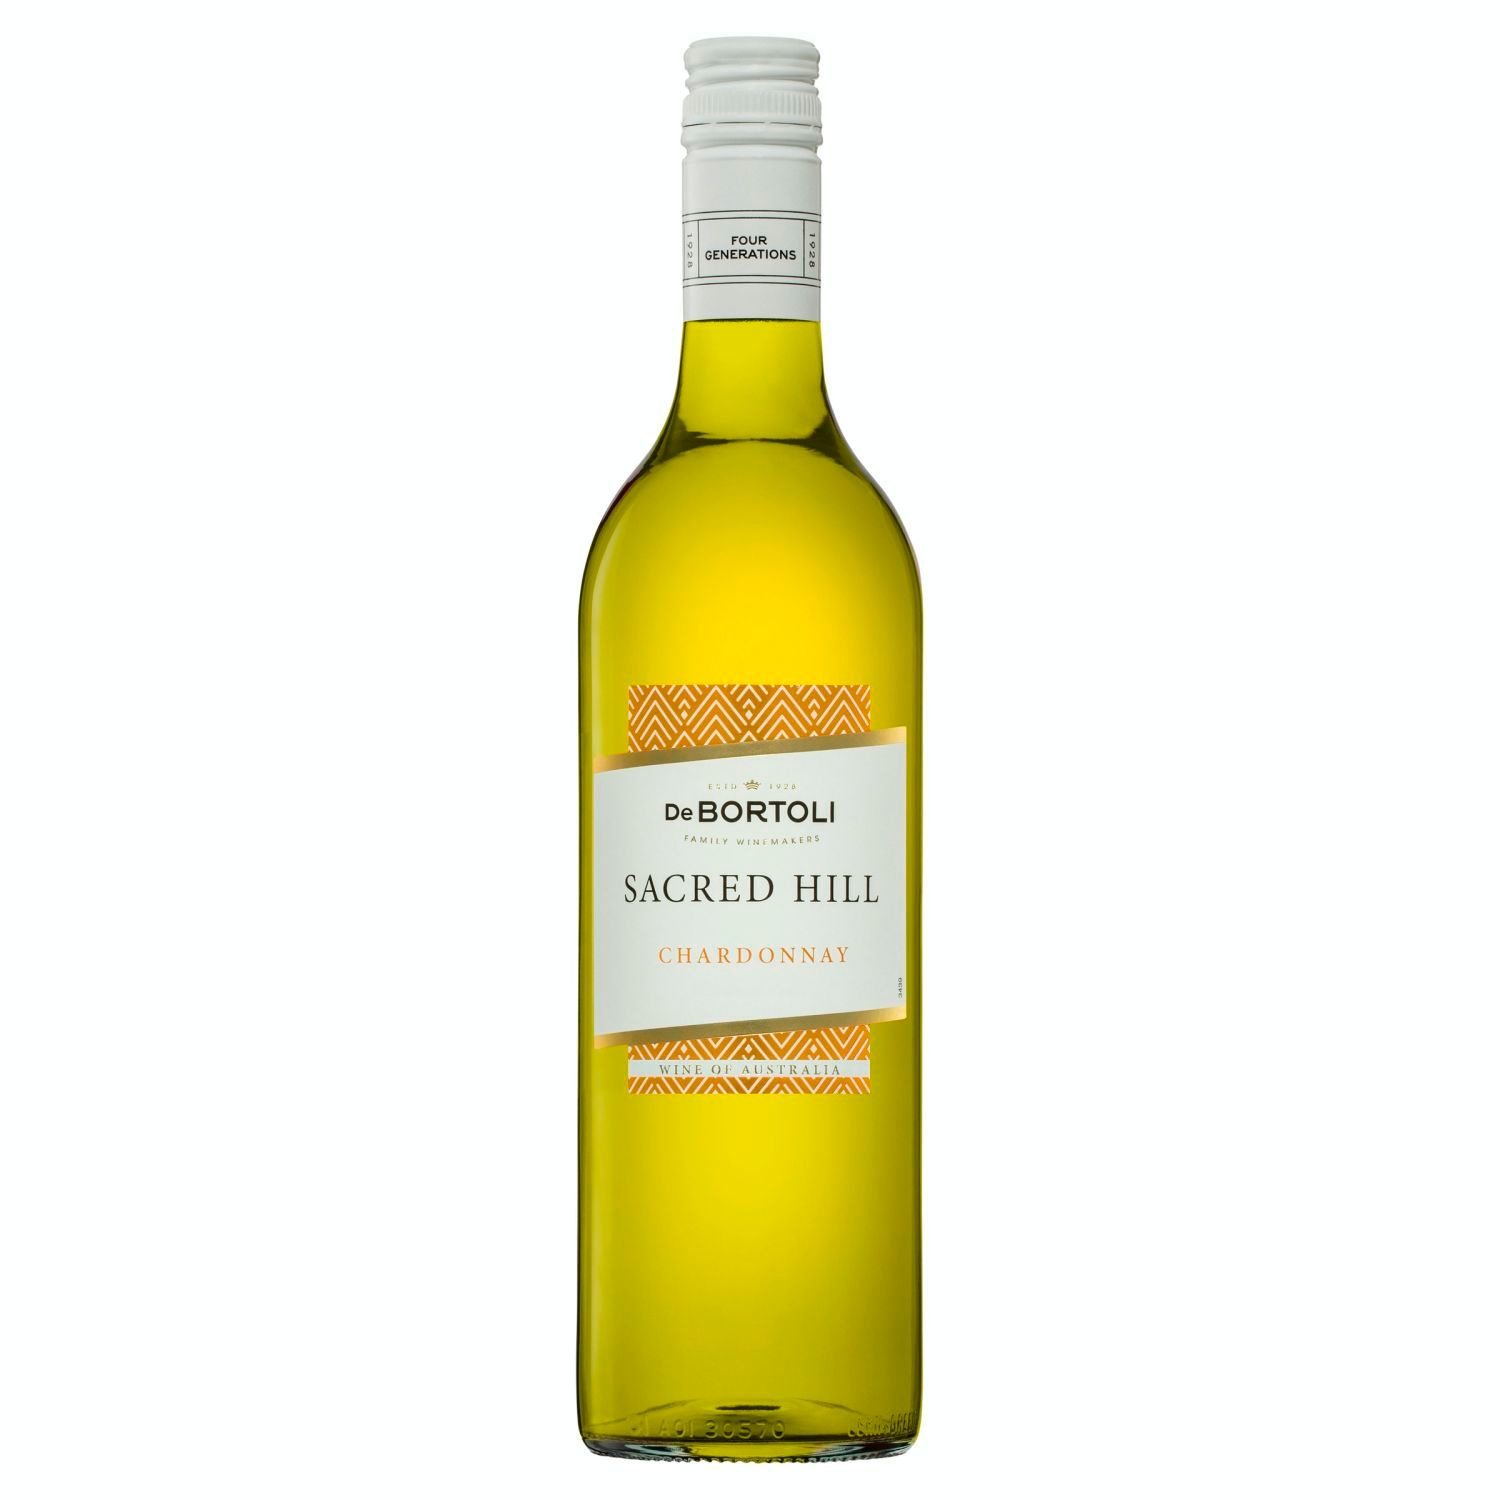 De Bortoli Sacred Hill Chardonnay 750mL Bottle